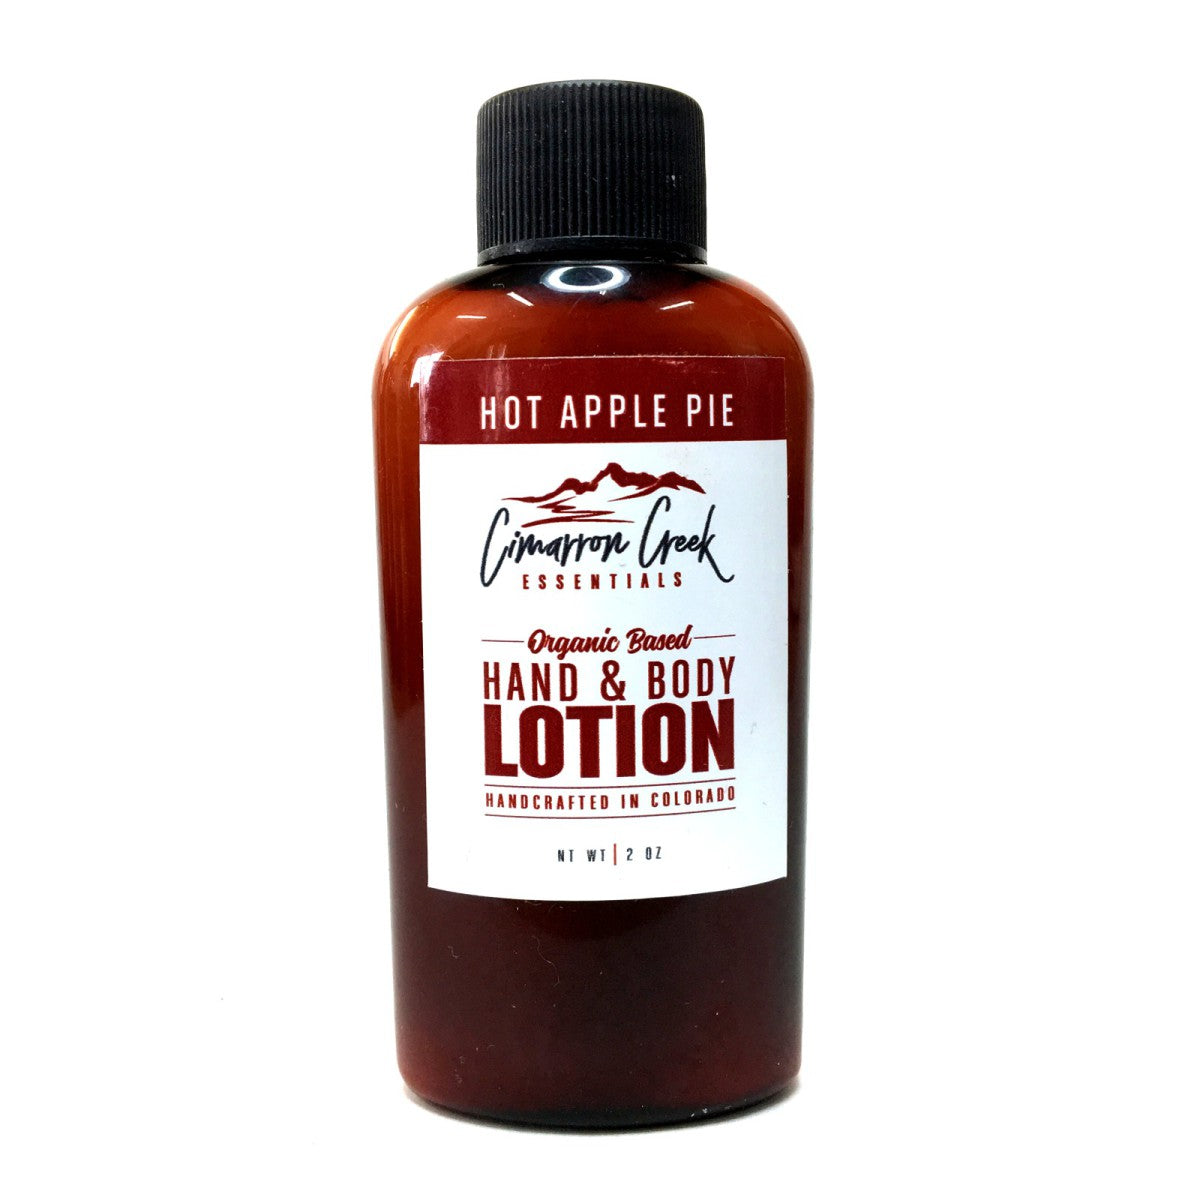 Hot Apple Pie Organic Hand & Body Lotion